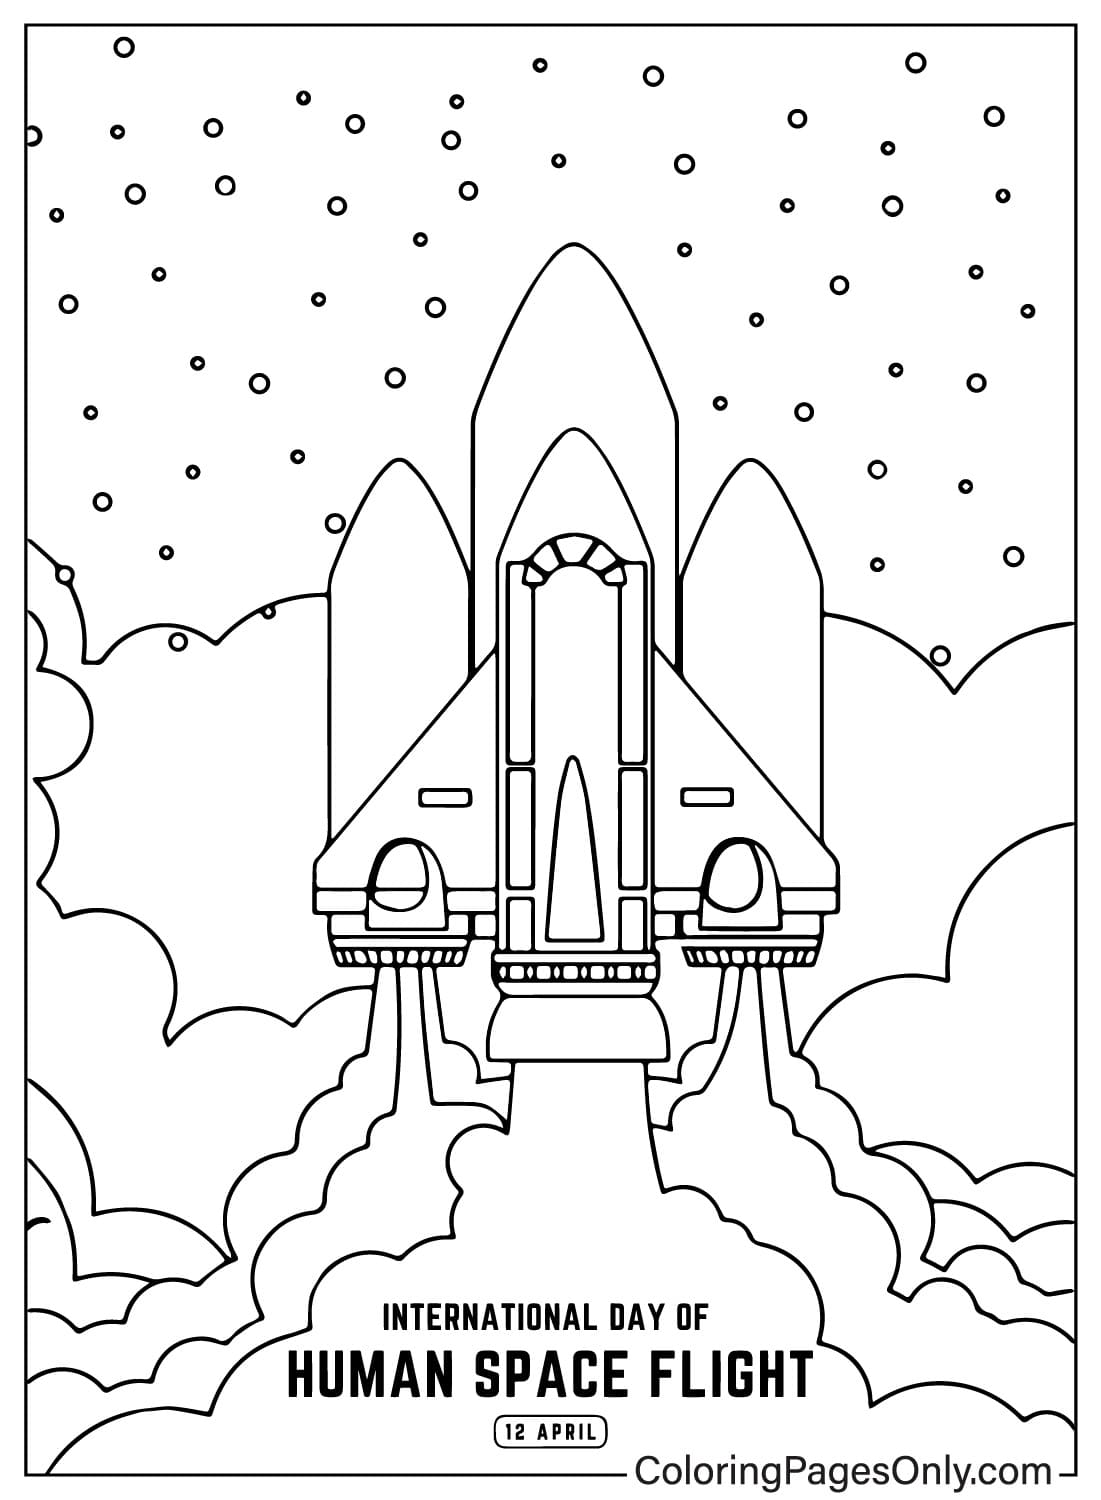 International Day of Human Space Flight Coloring Book from International Day of Human Space Flight